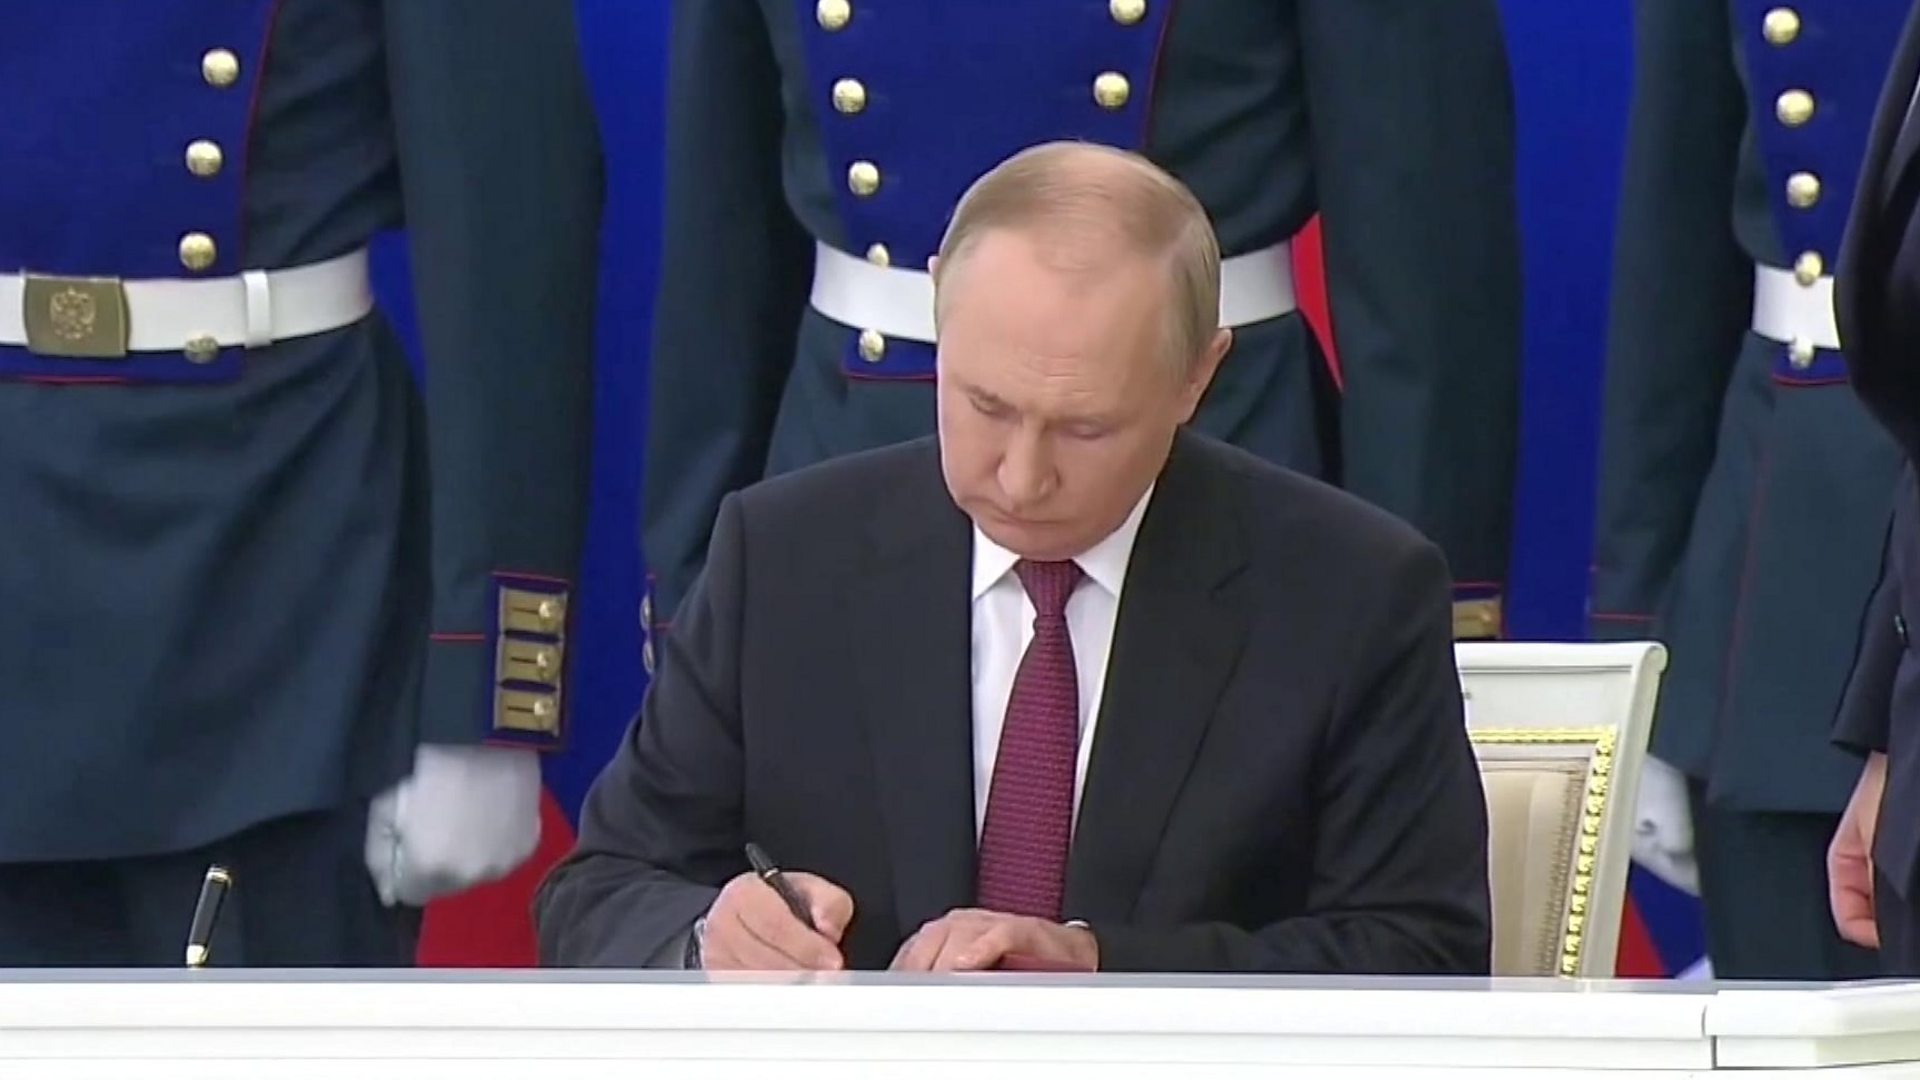 Putin signs annexation documents